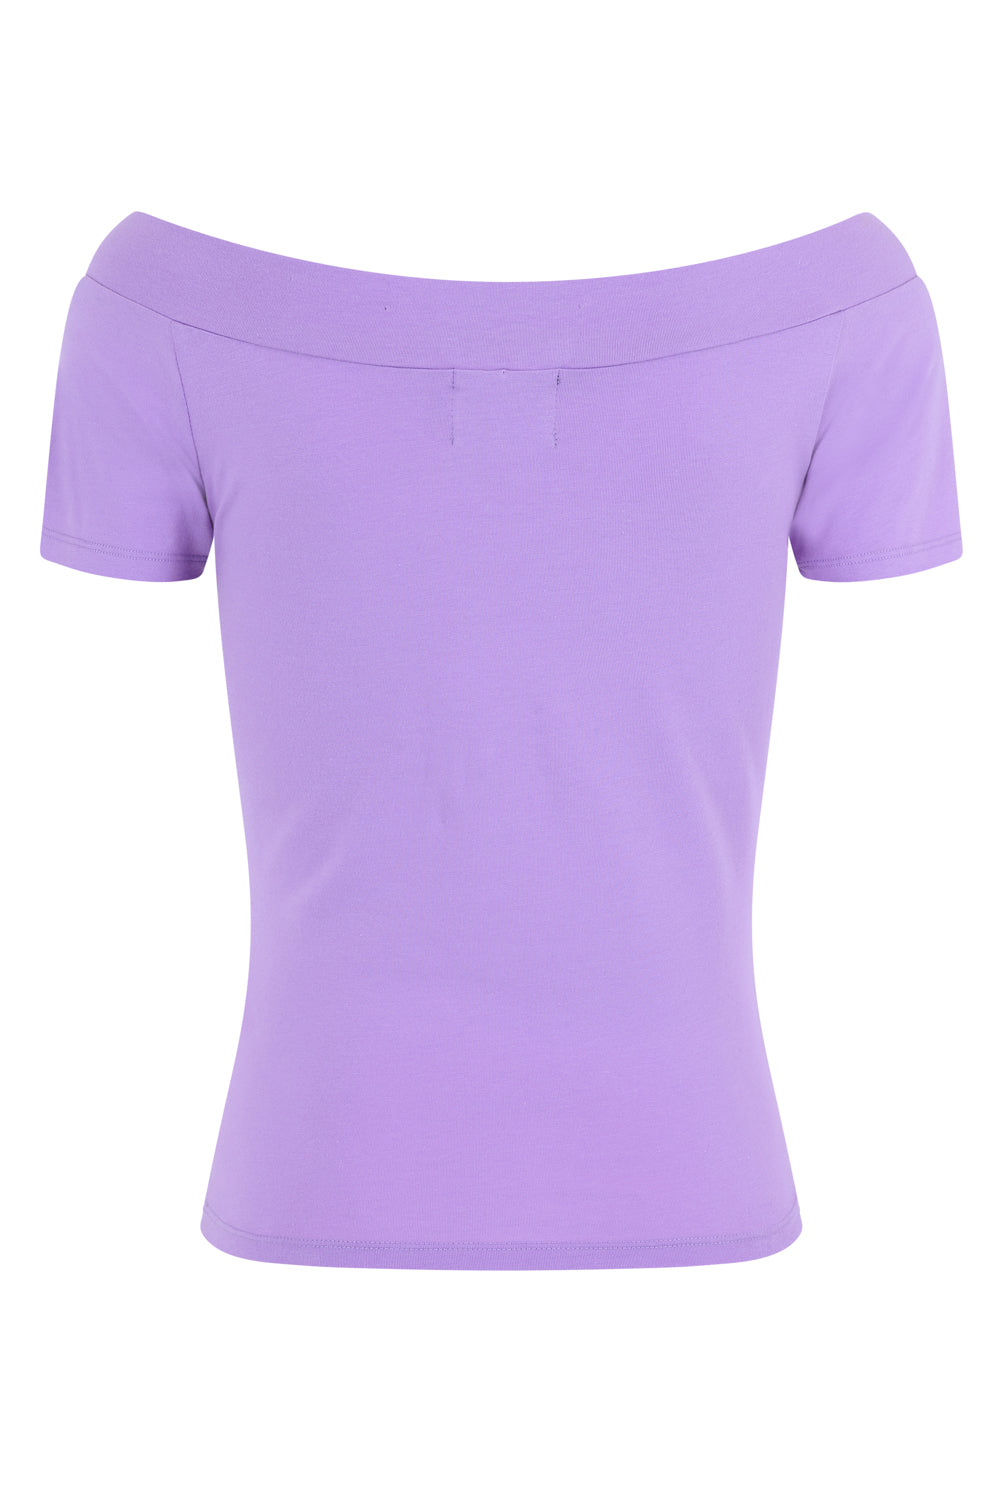 1950s Inspired Alex Short Sleeve Top In Lavender Purple